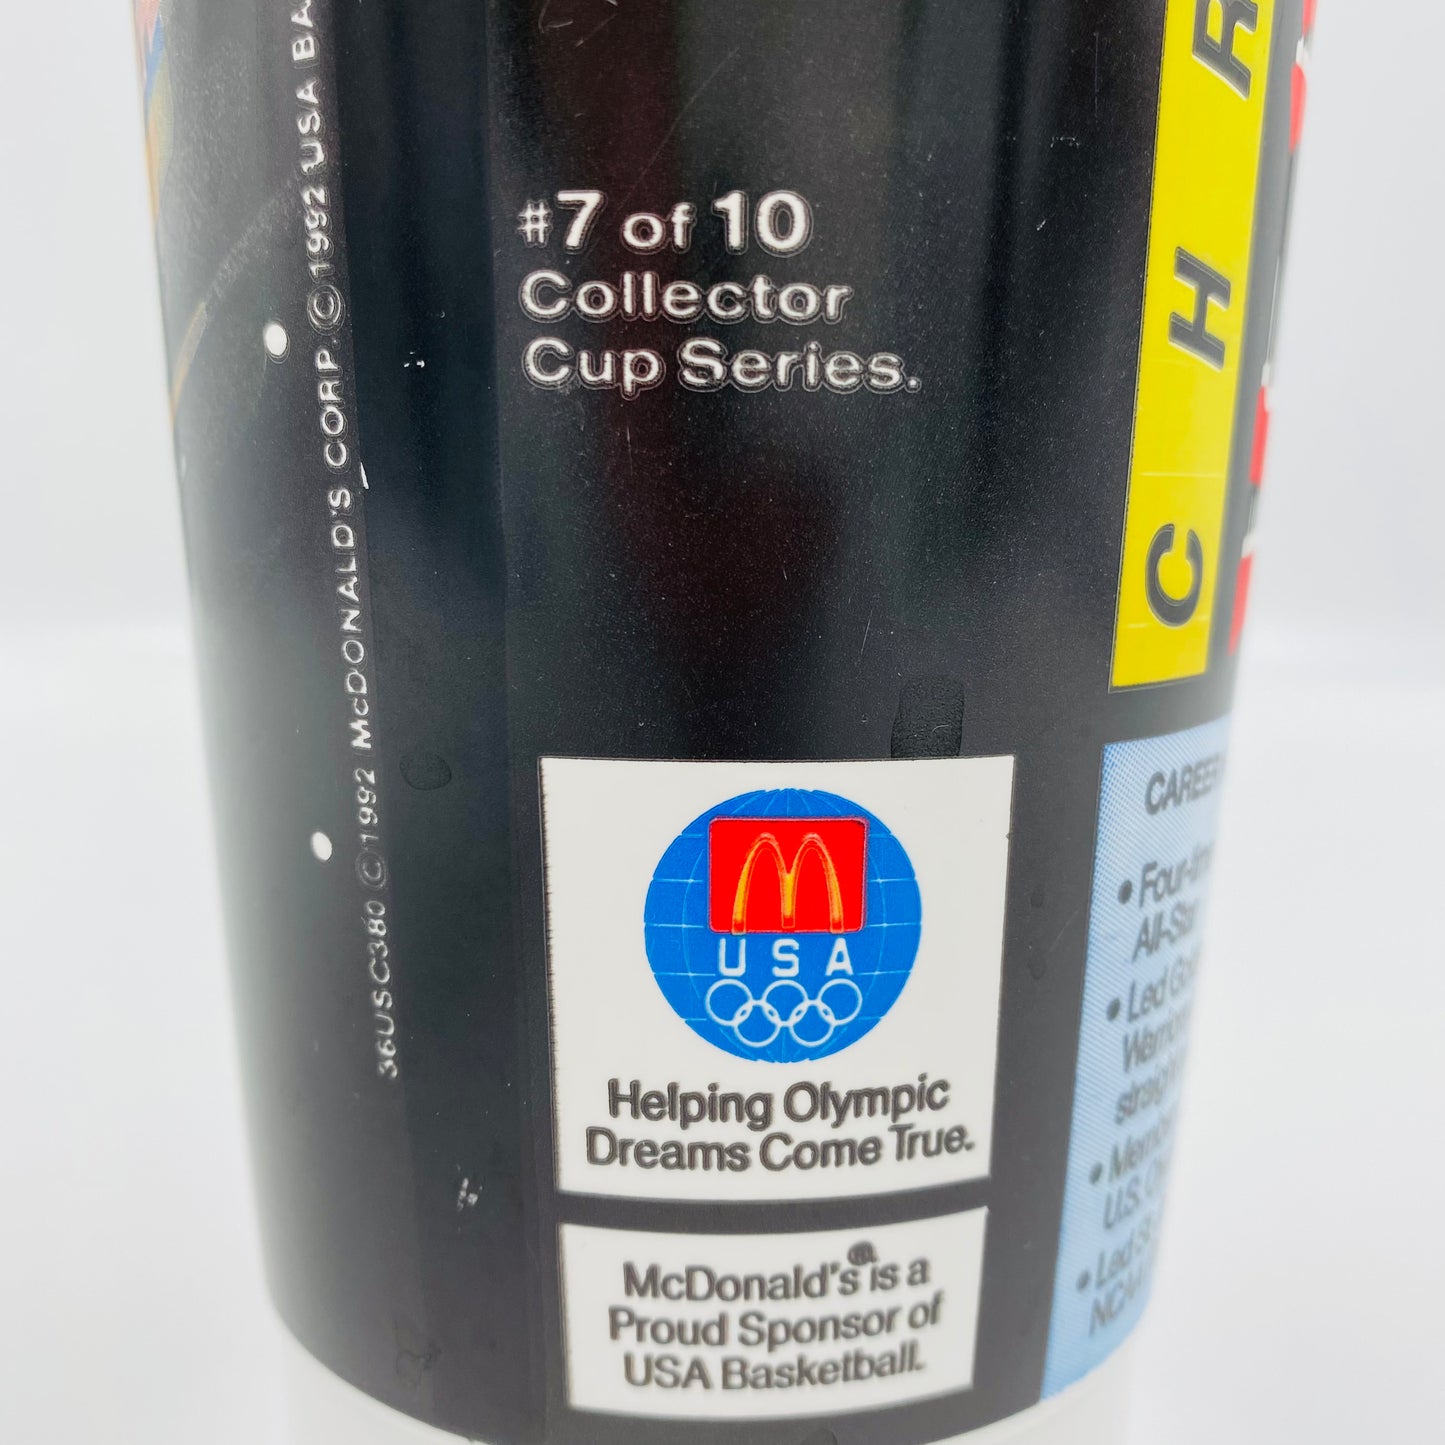 USA Basketball Dream Team Chris Mullin 32oz plastic cup (1992) McDonald's